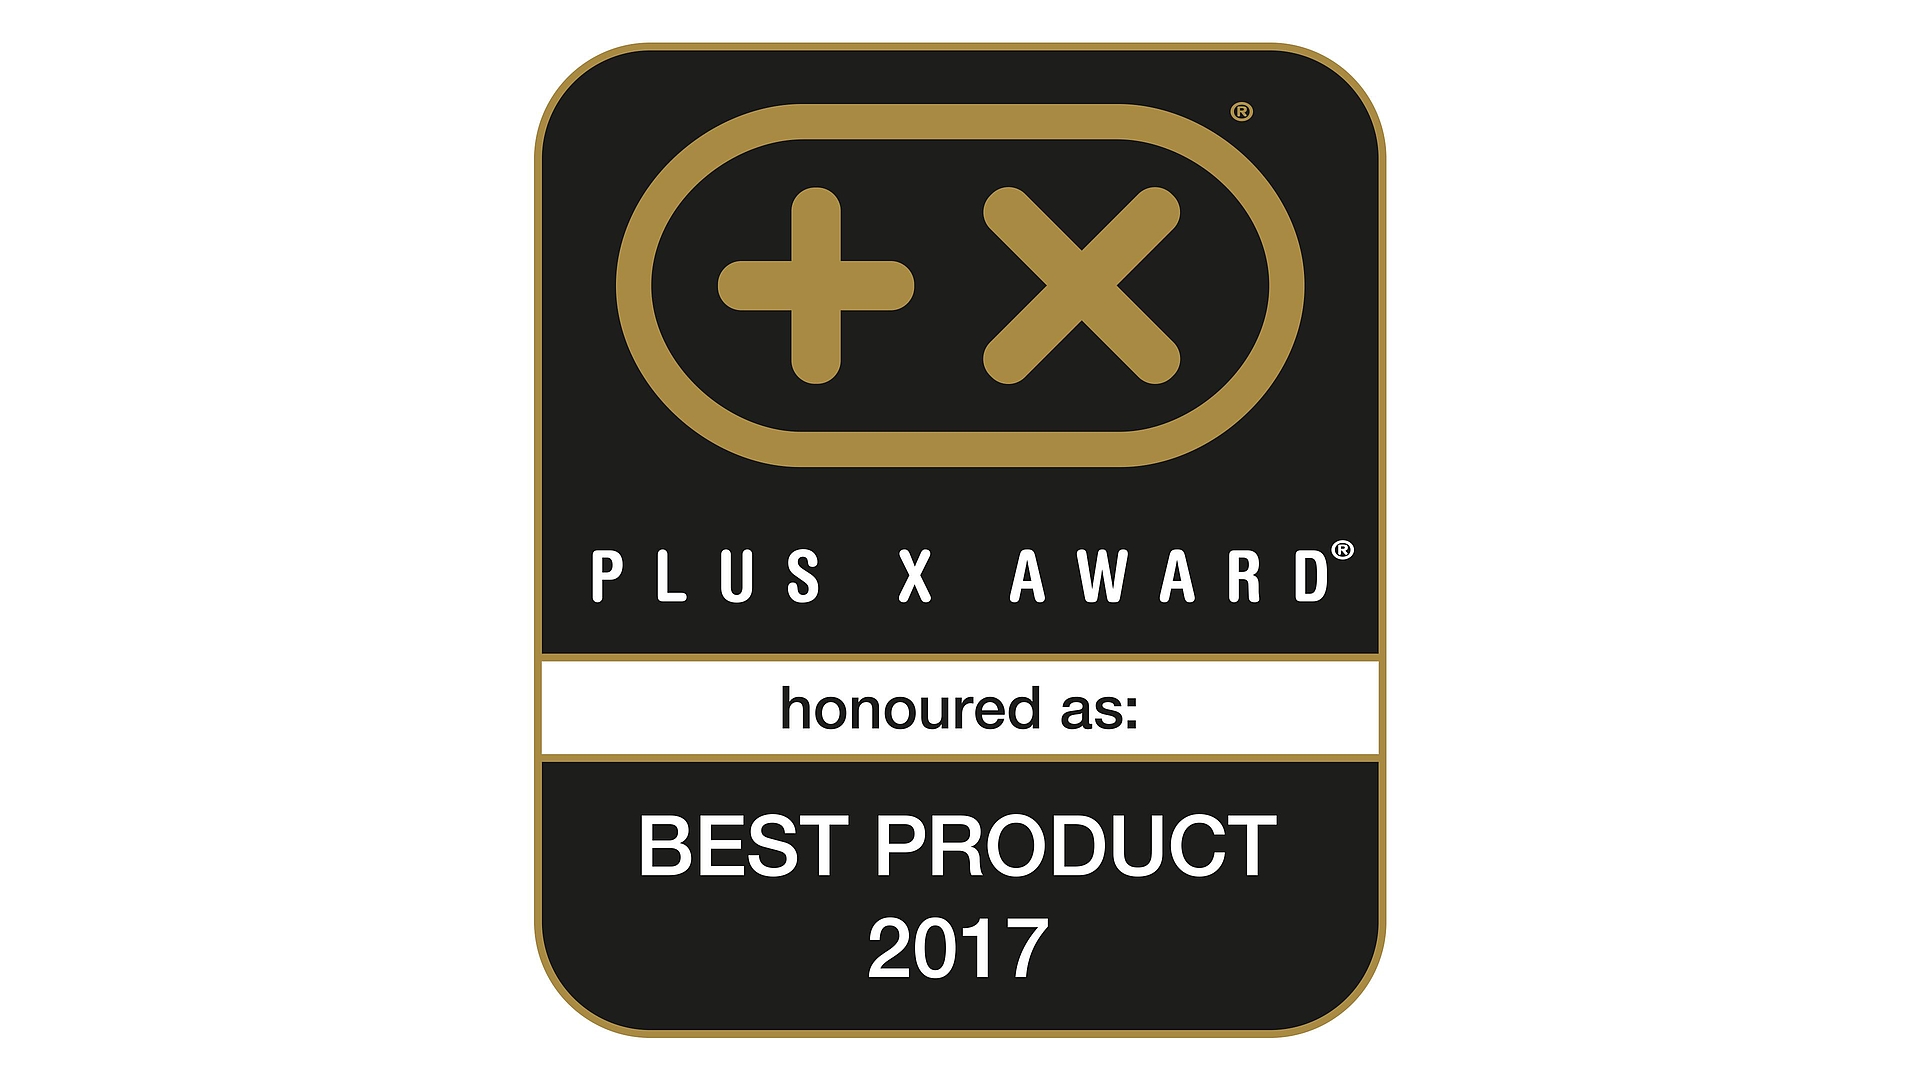 Plus X Award Best Product 2017